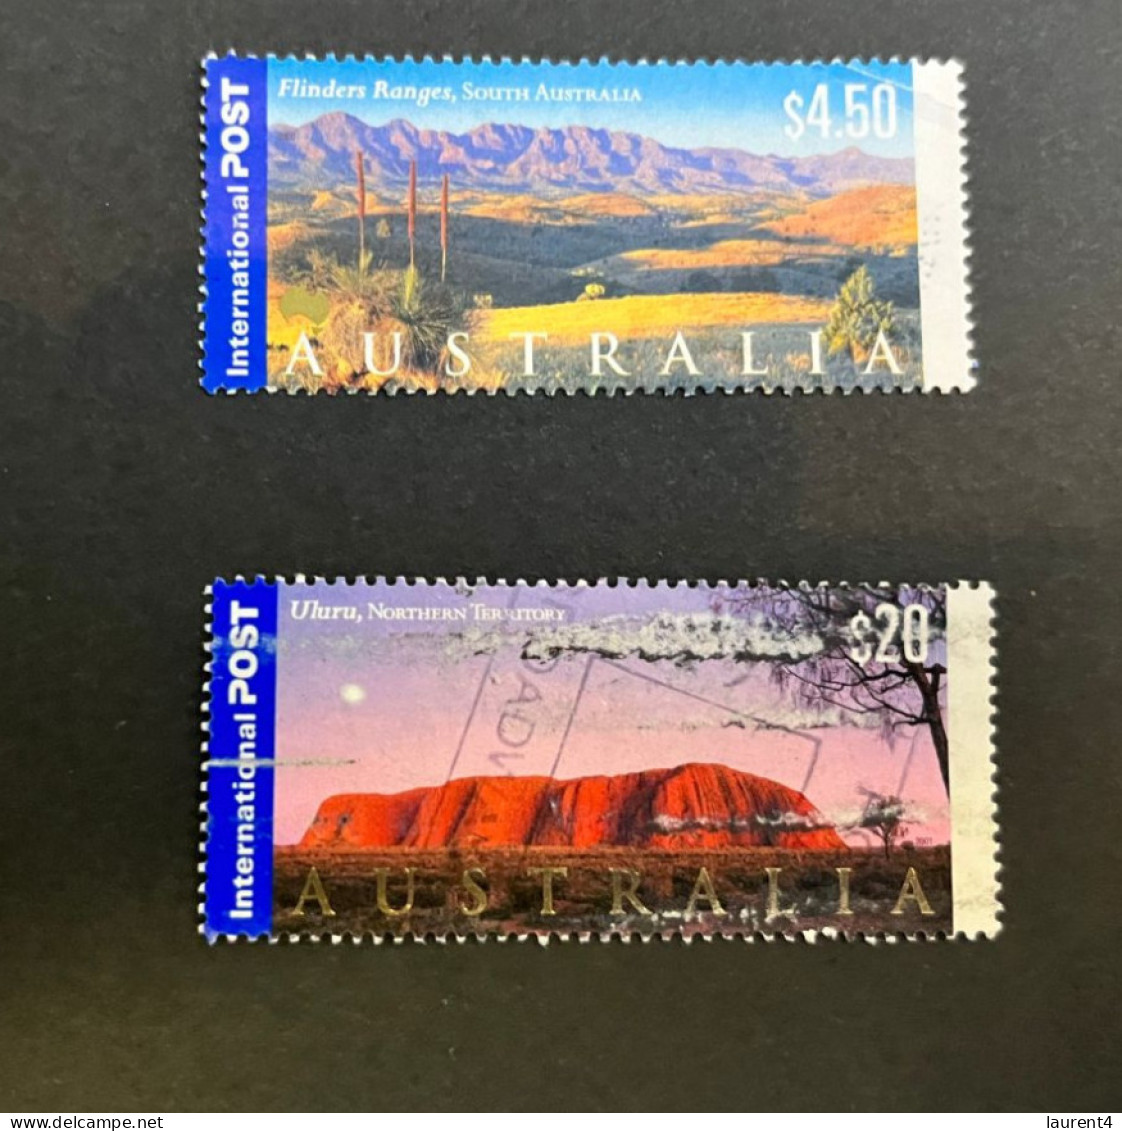 14-5-2024 (stamp) Used / Obliterer - Australia - 2 HIGHER Values Stamps (include $ 20.00 Stamp) - Nuevos